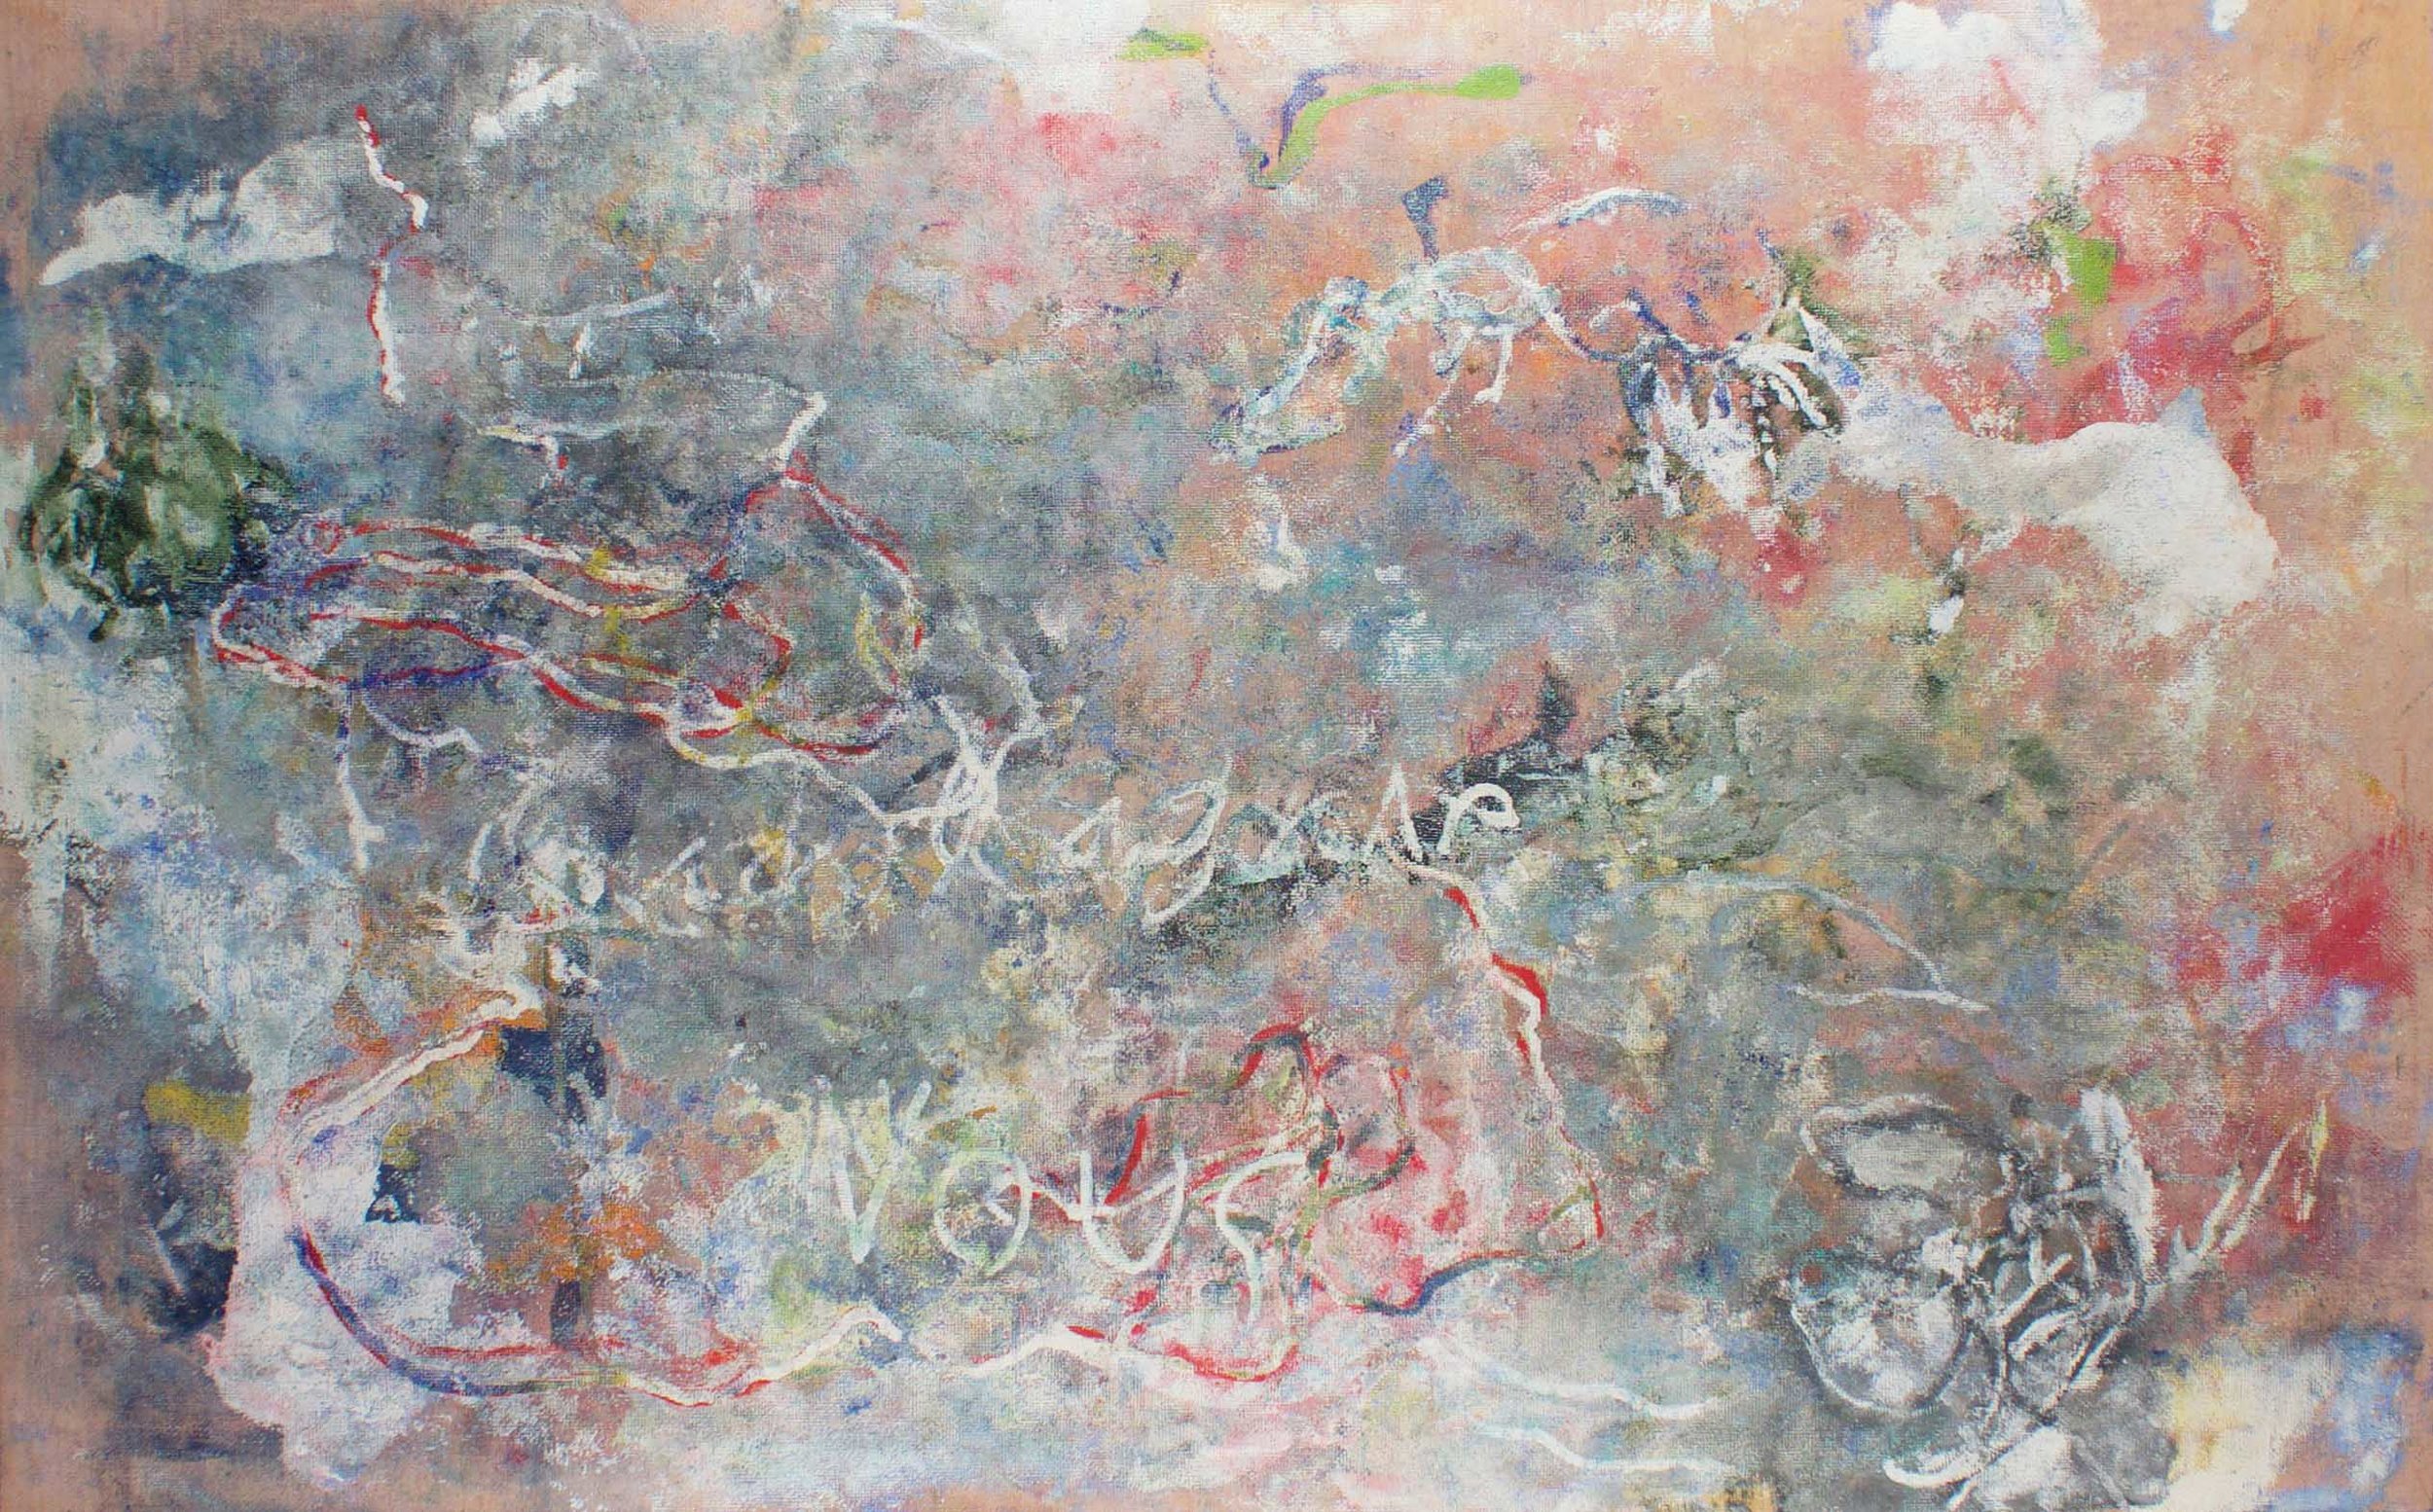    Anaxagoras , 2015   Oil on panel  30 x 48 inches 